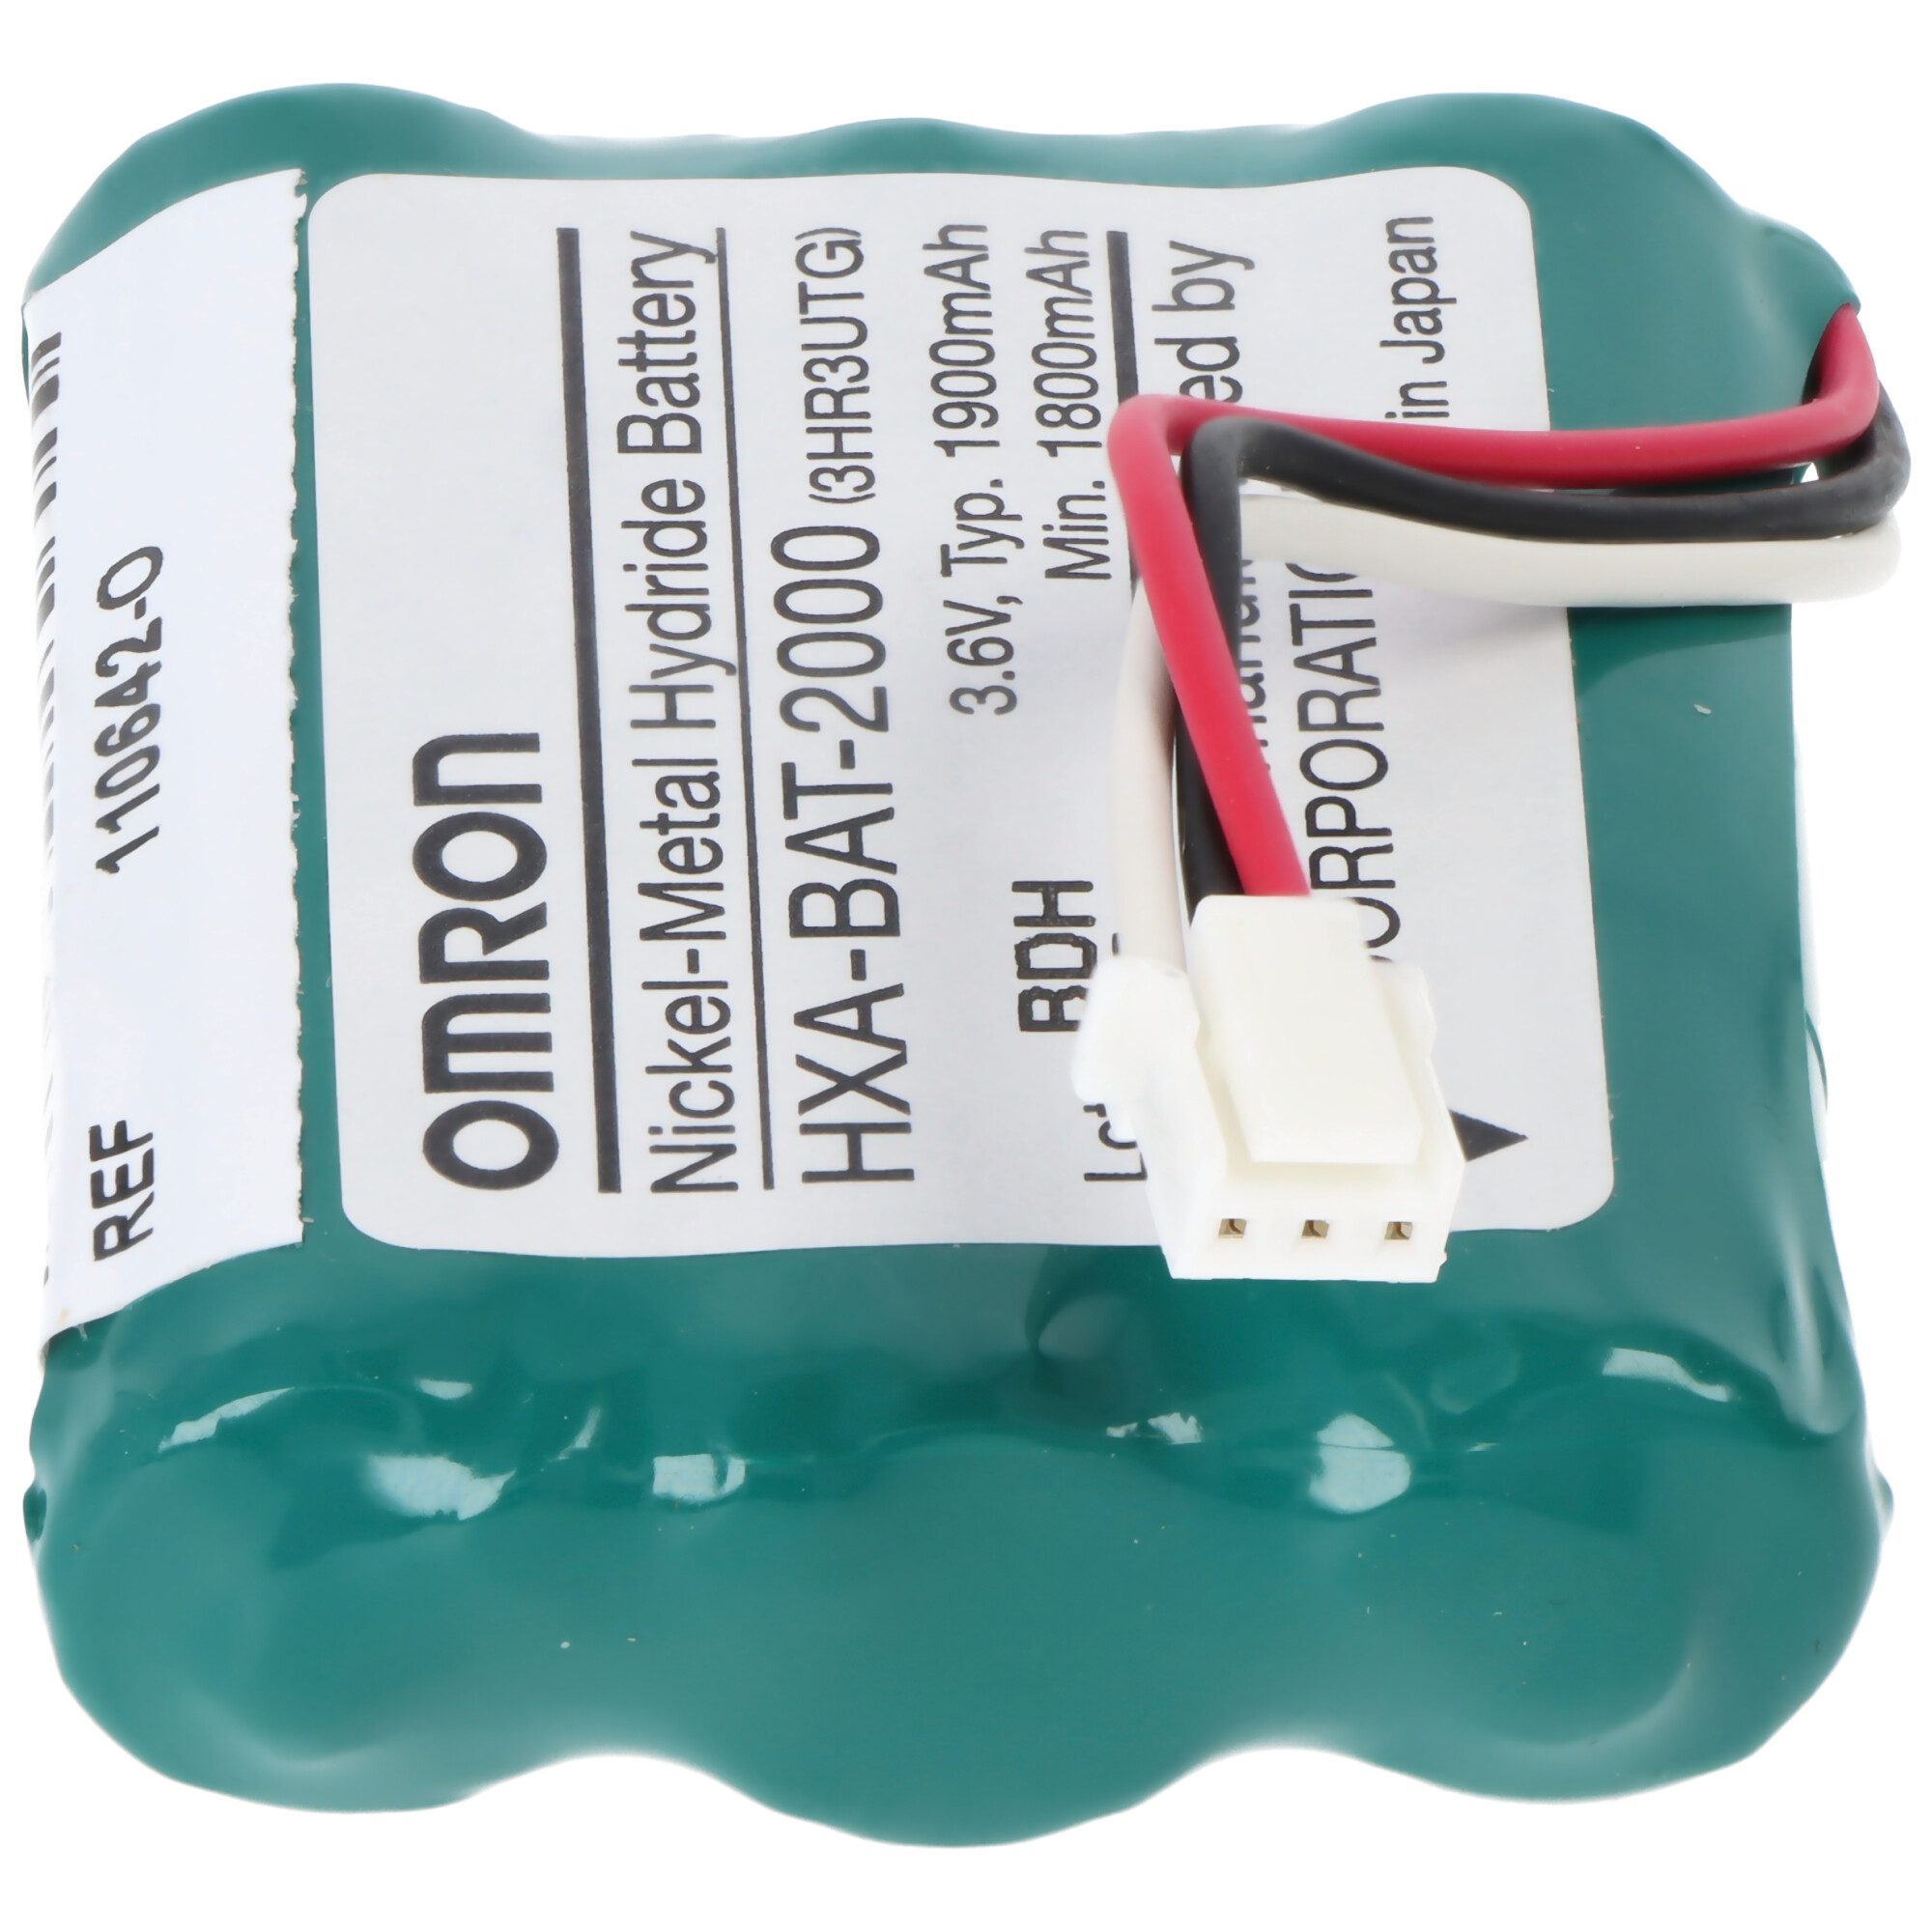 Original NiMH Akku passend für Omron Healthcare HBP-1300 HPM-1300 Blutdruckmessgerät Typ HXA-BAT2000 9065797-O 3,6 Volt 1,9 Ah